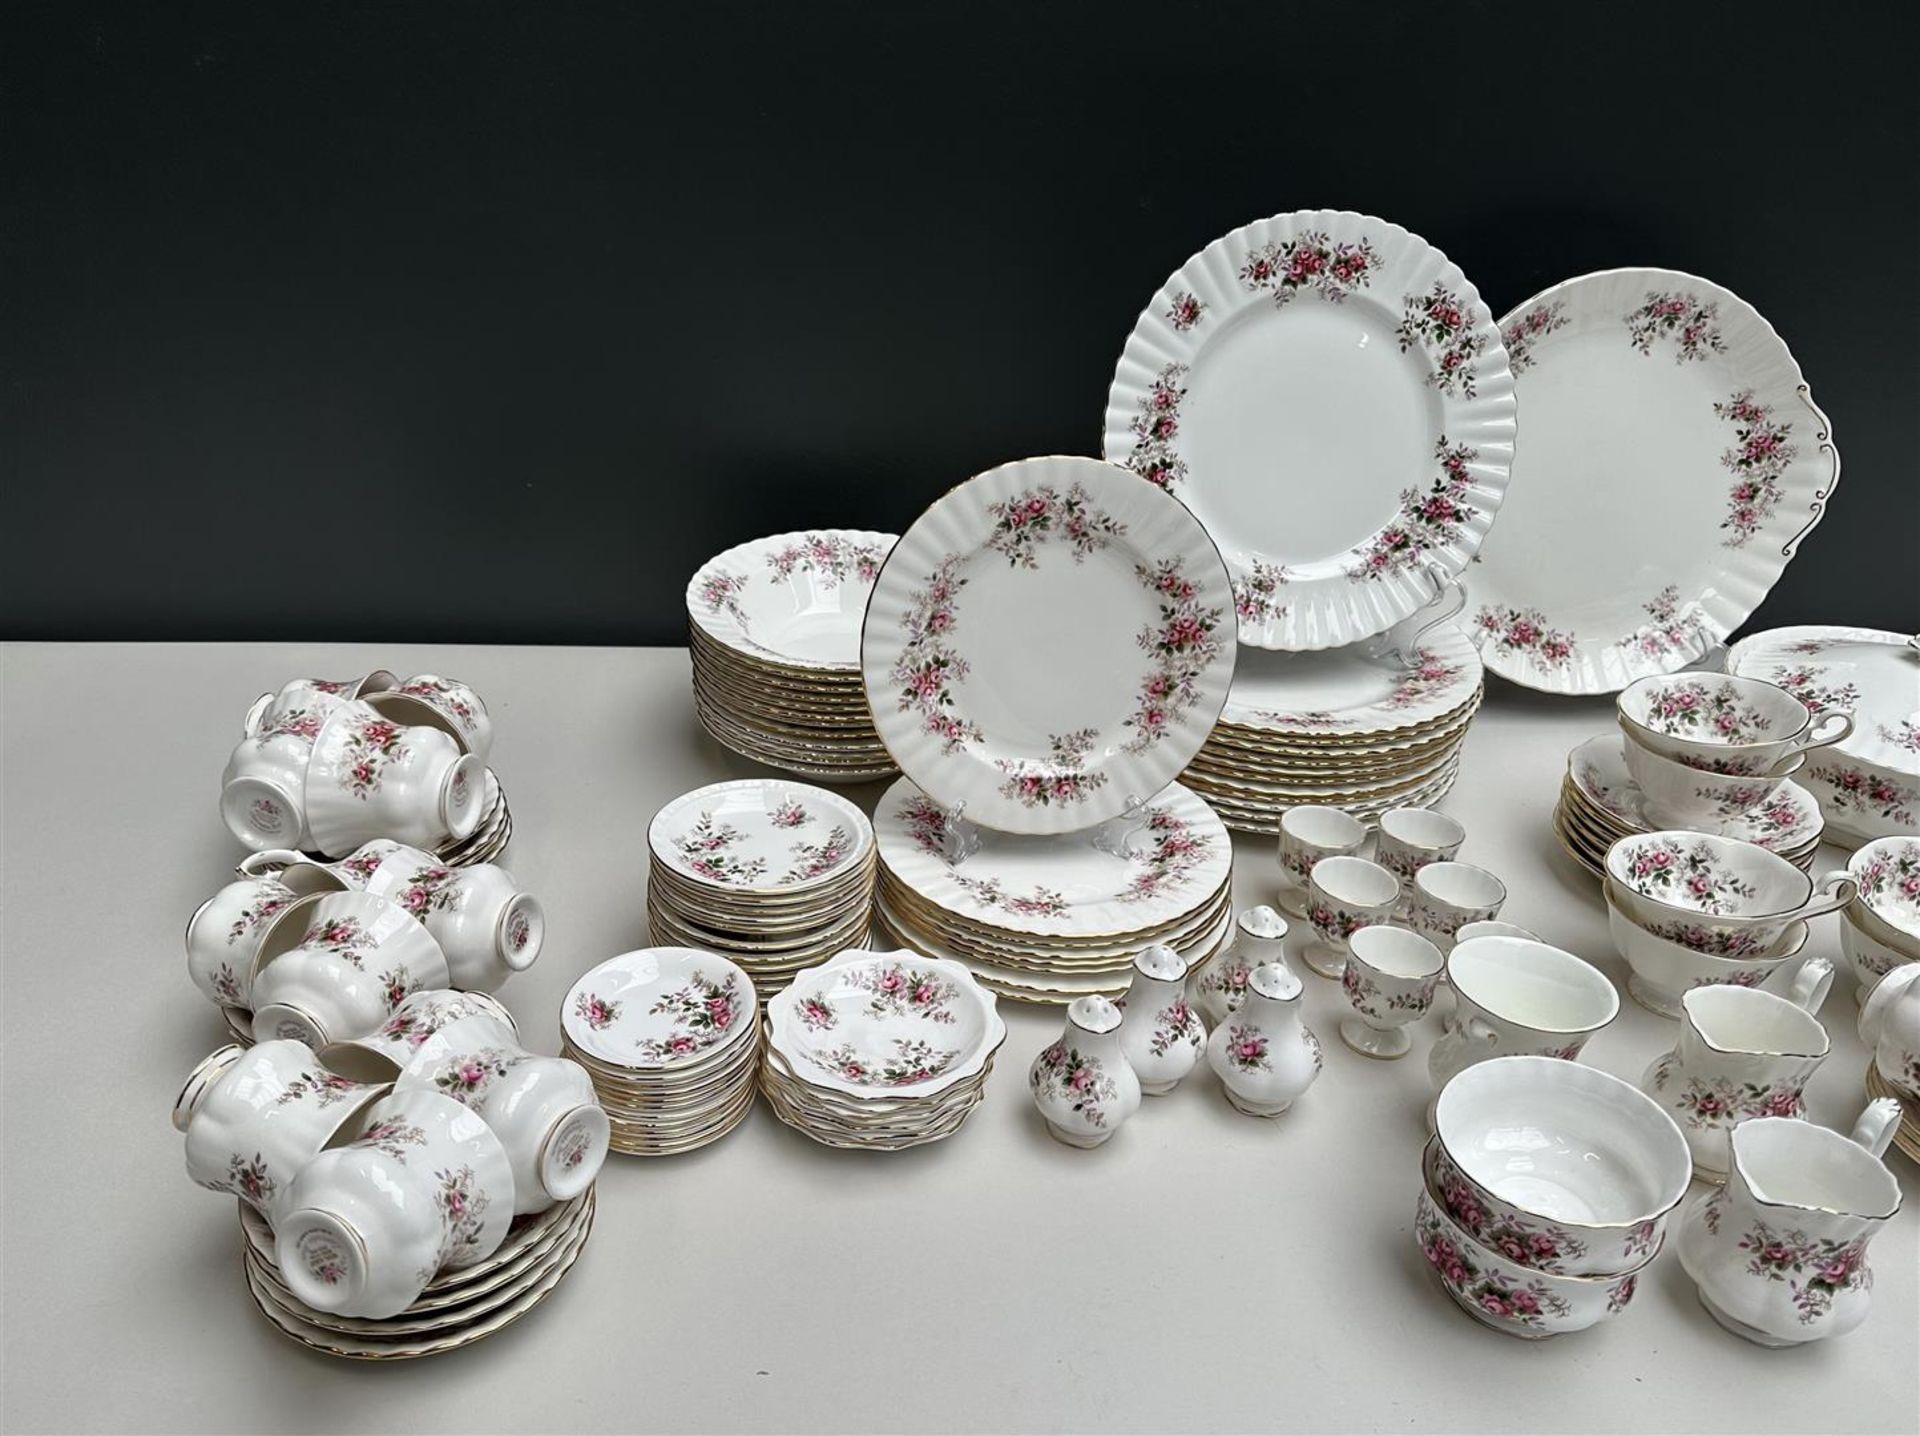 A 118-piece Royal Albert Lavender Rose Bone China part  diner set,  - Image 3 of 4